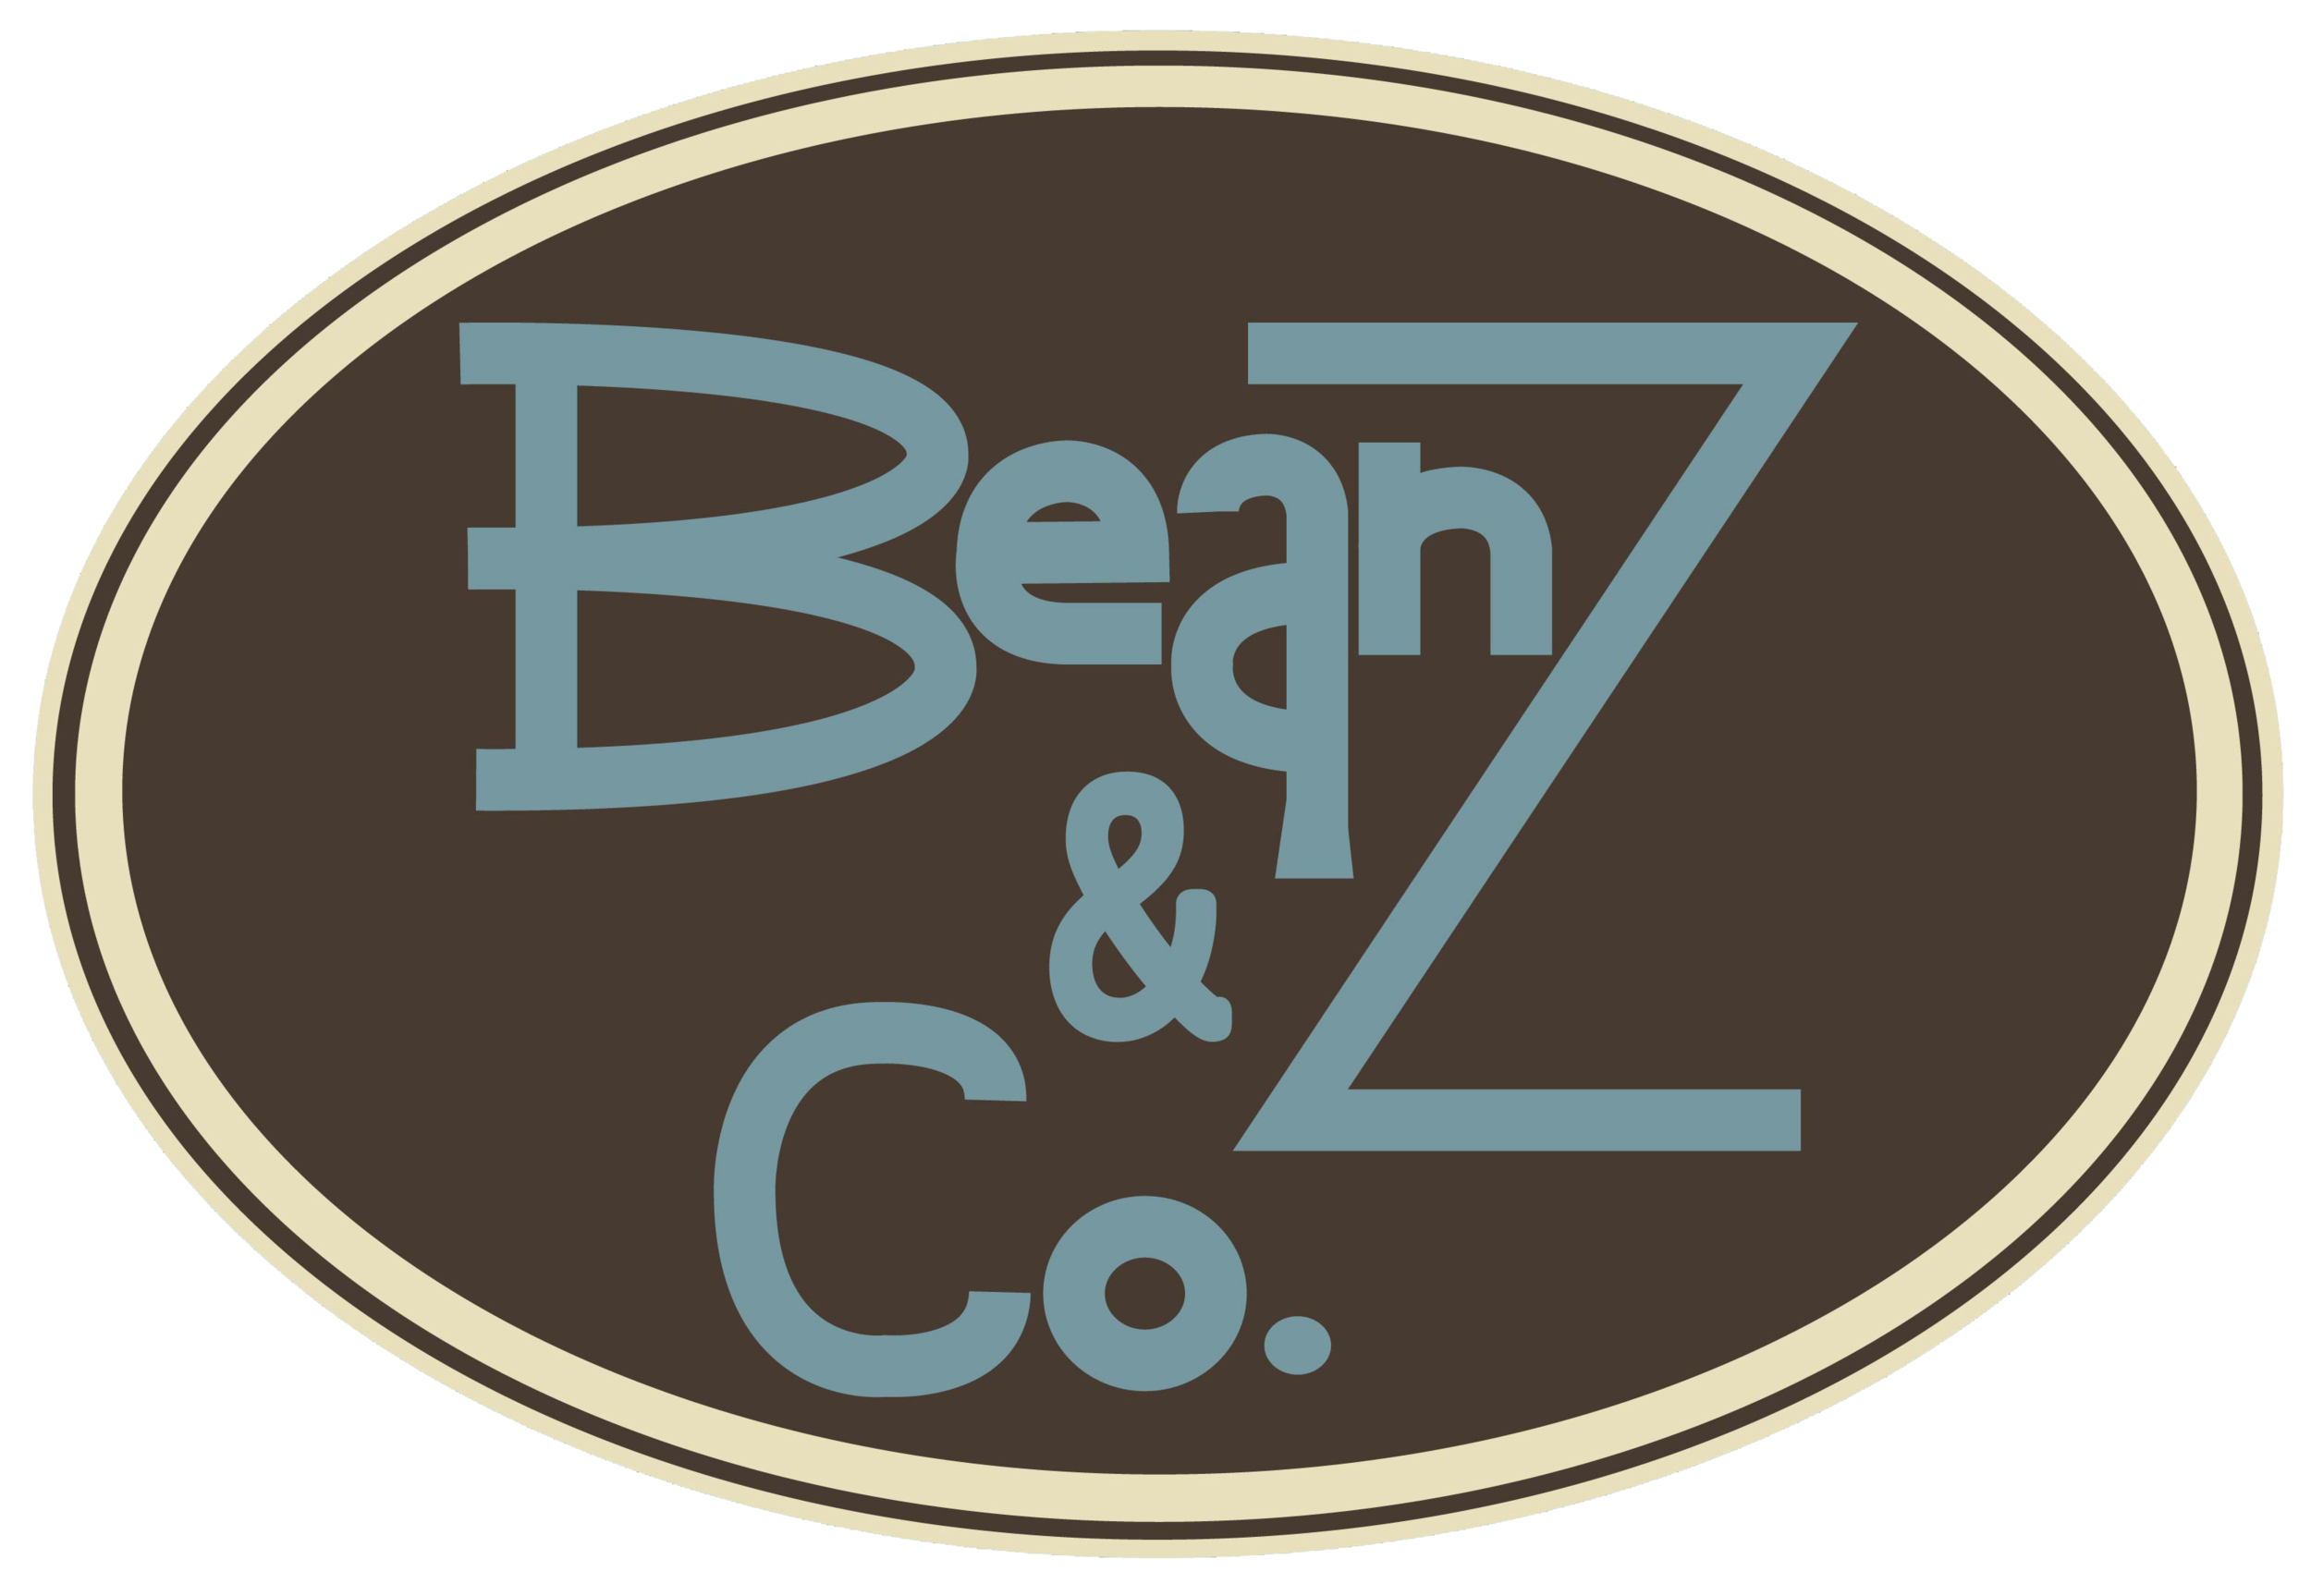 BeanZ and Co. | Where Everyone Belongs